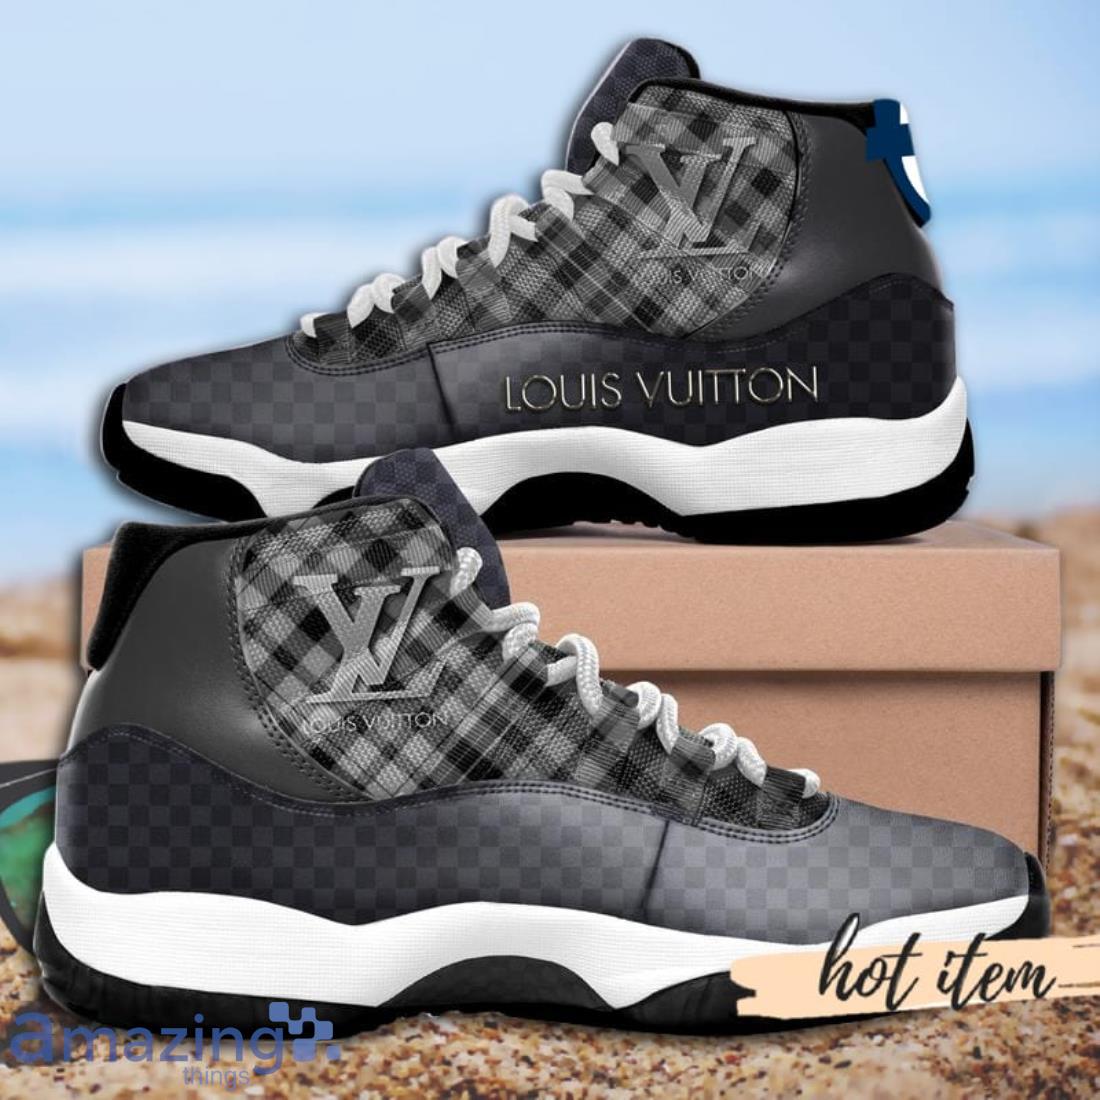 Louis Vuitton Ver 6 Air Jordan 11 Shoes Fashsion Shoes